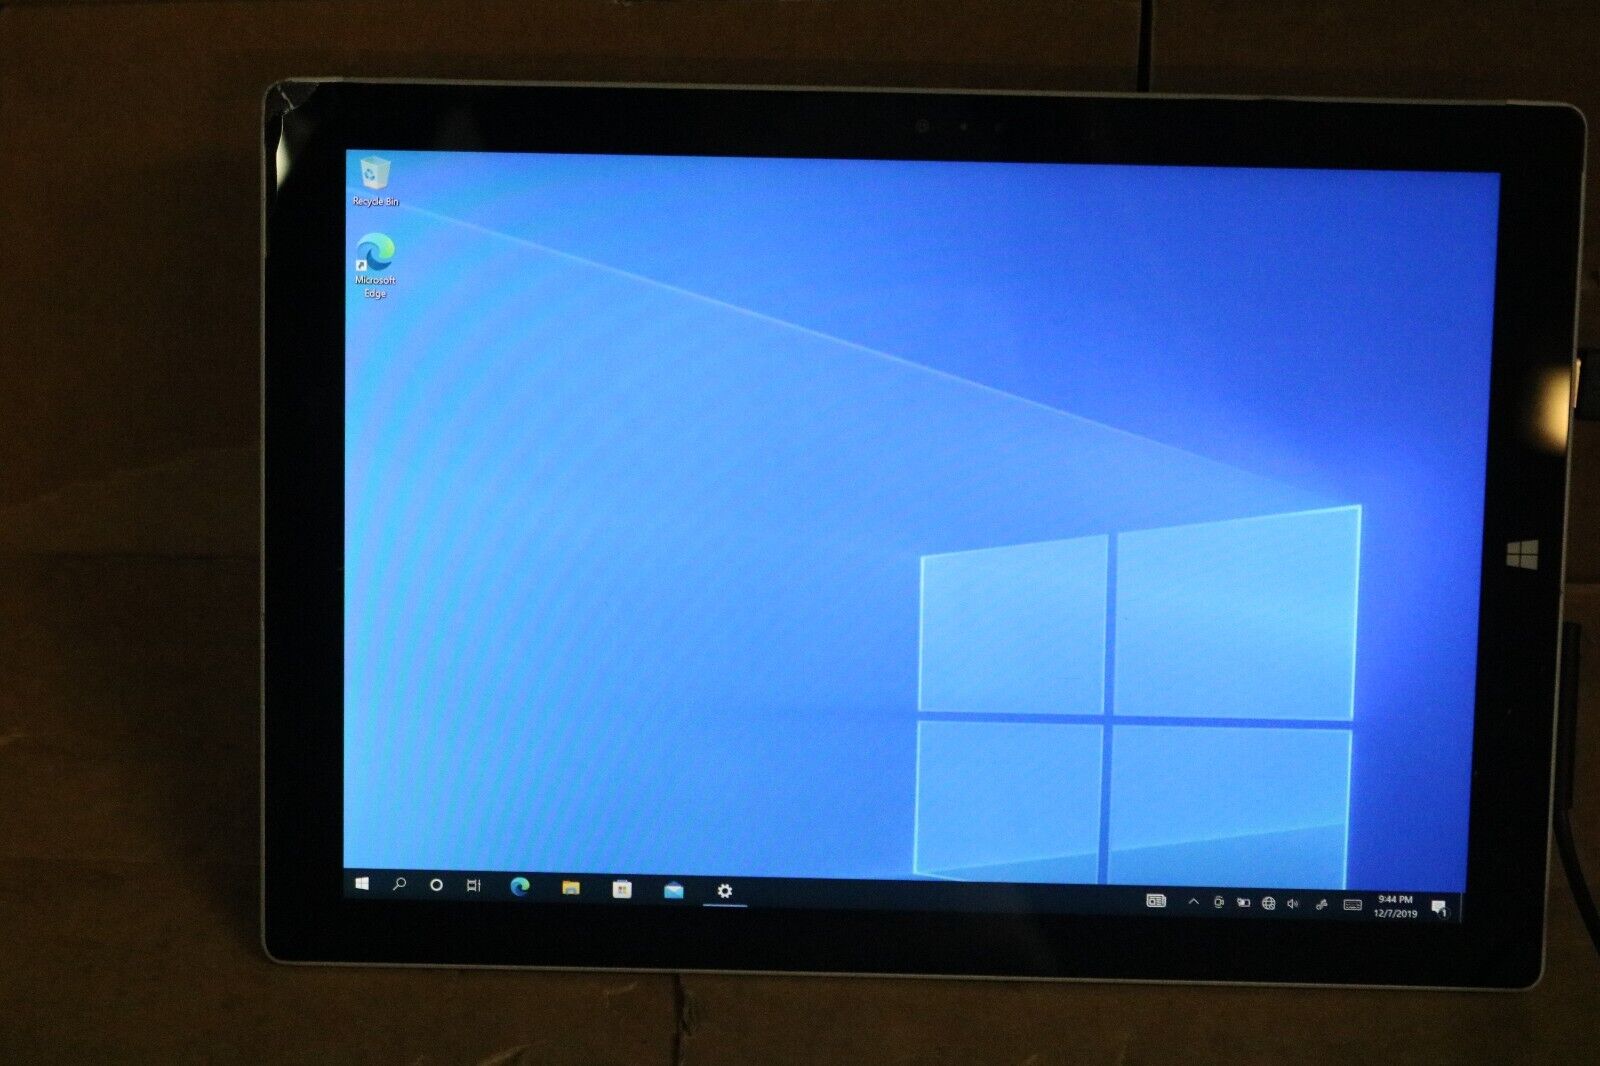 Microsoft Surface Pro 3 1631 I5-4300U 4GB RAM 128GB WINDOWS 10 PRO READ